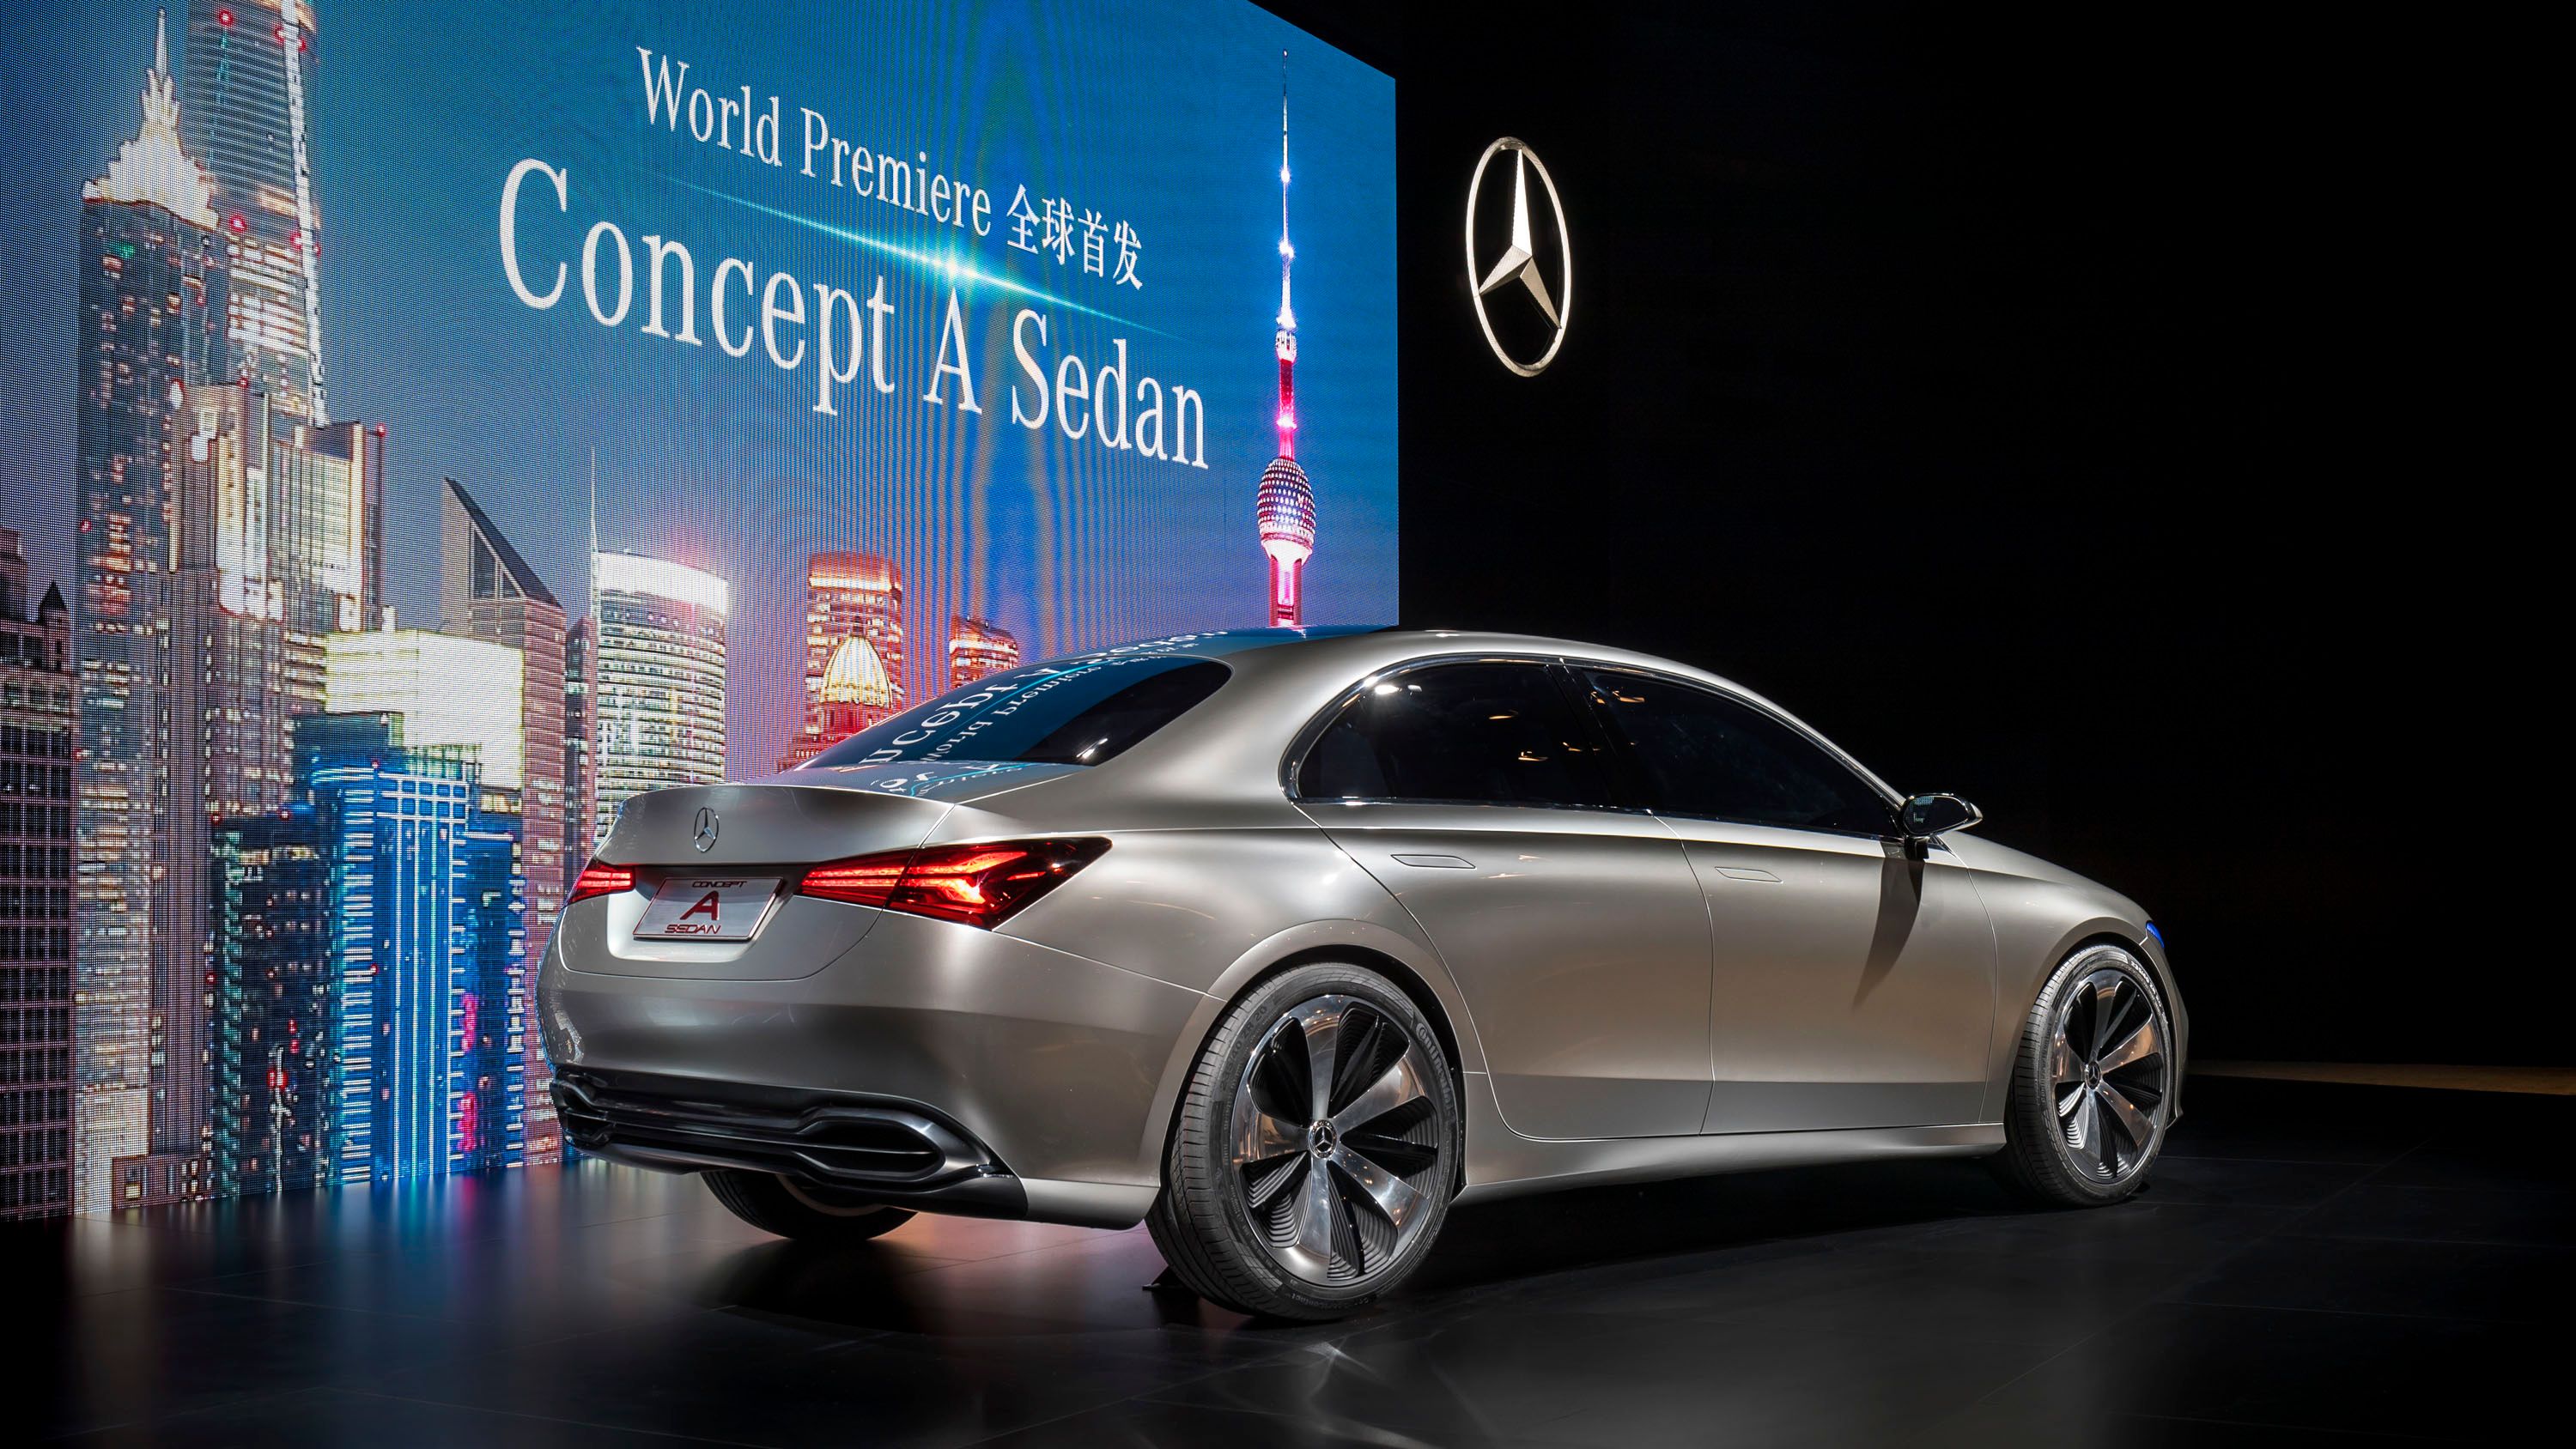 2017 Mercedes-Benz Concept A Sedan